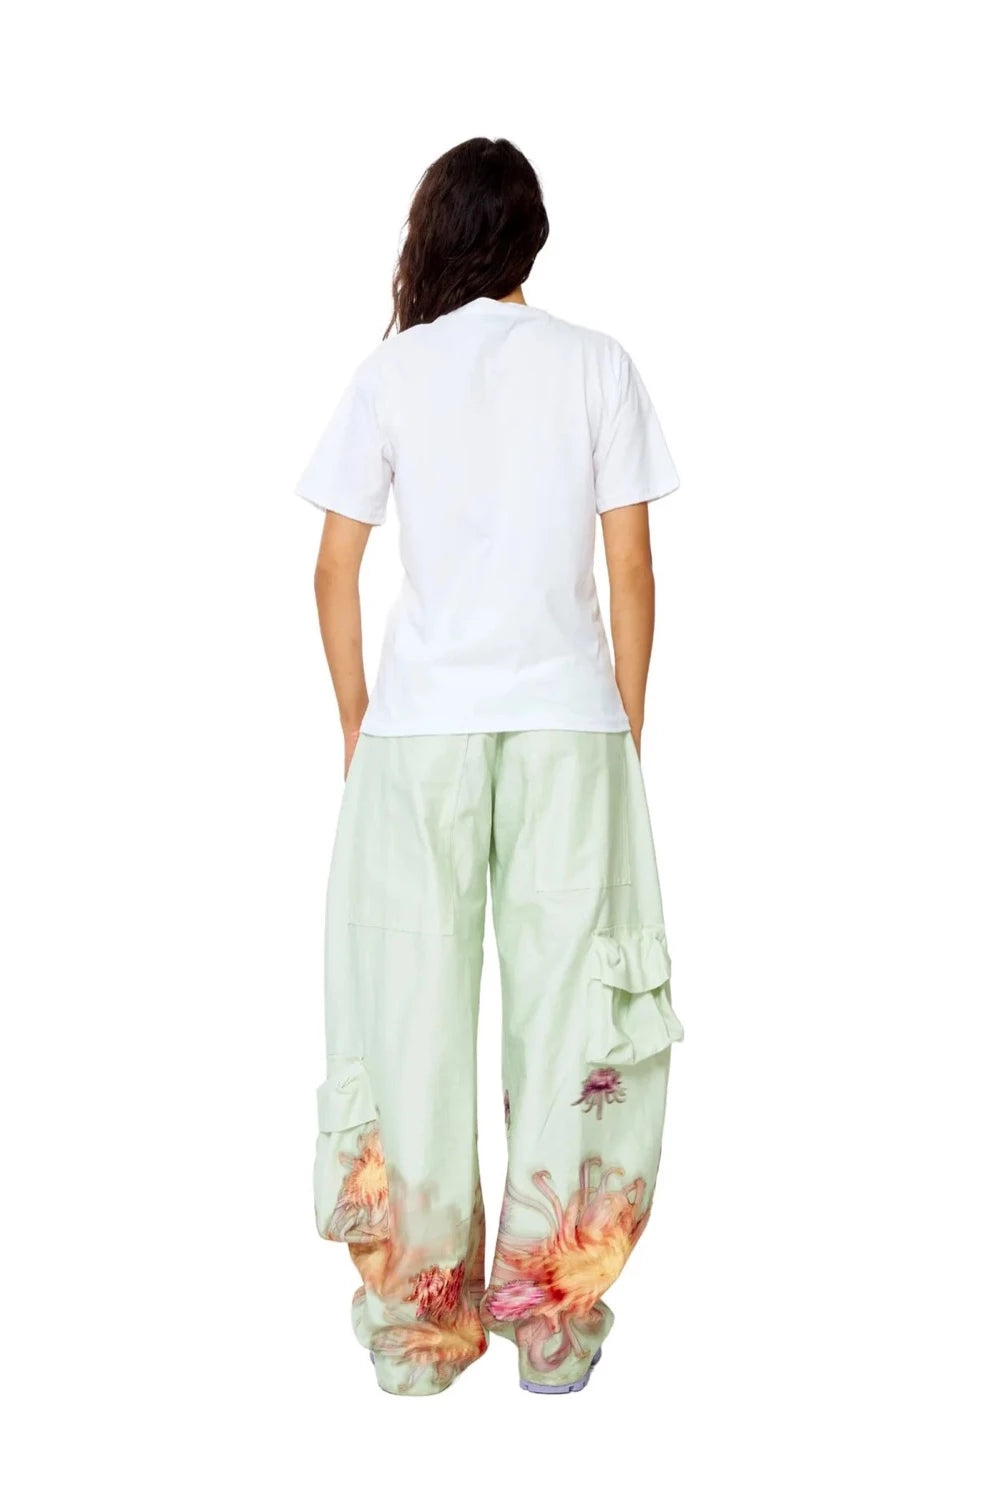 Collina Strada - Lawn Cargo Pant: Mint Chrysanthemum